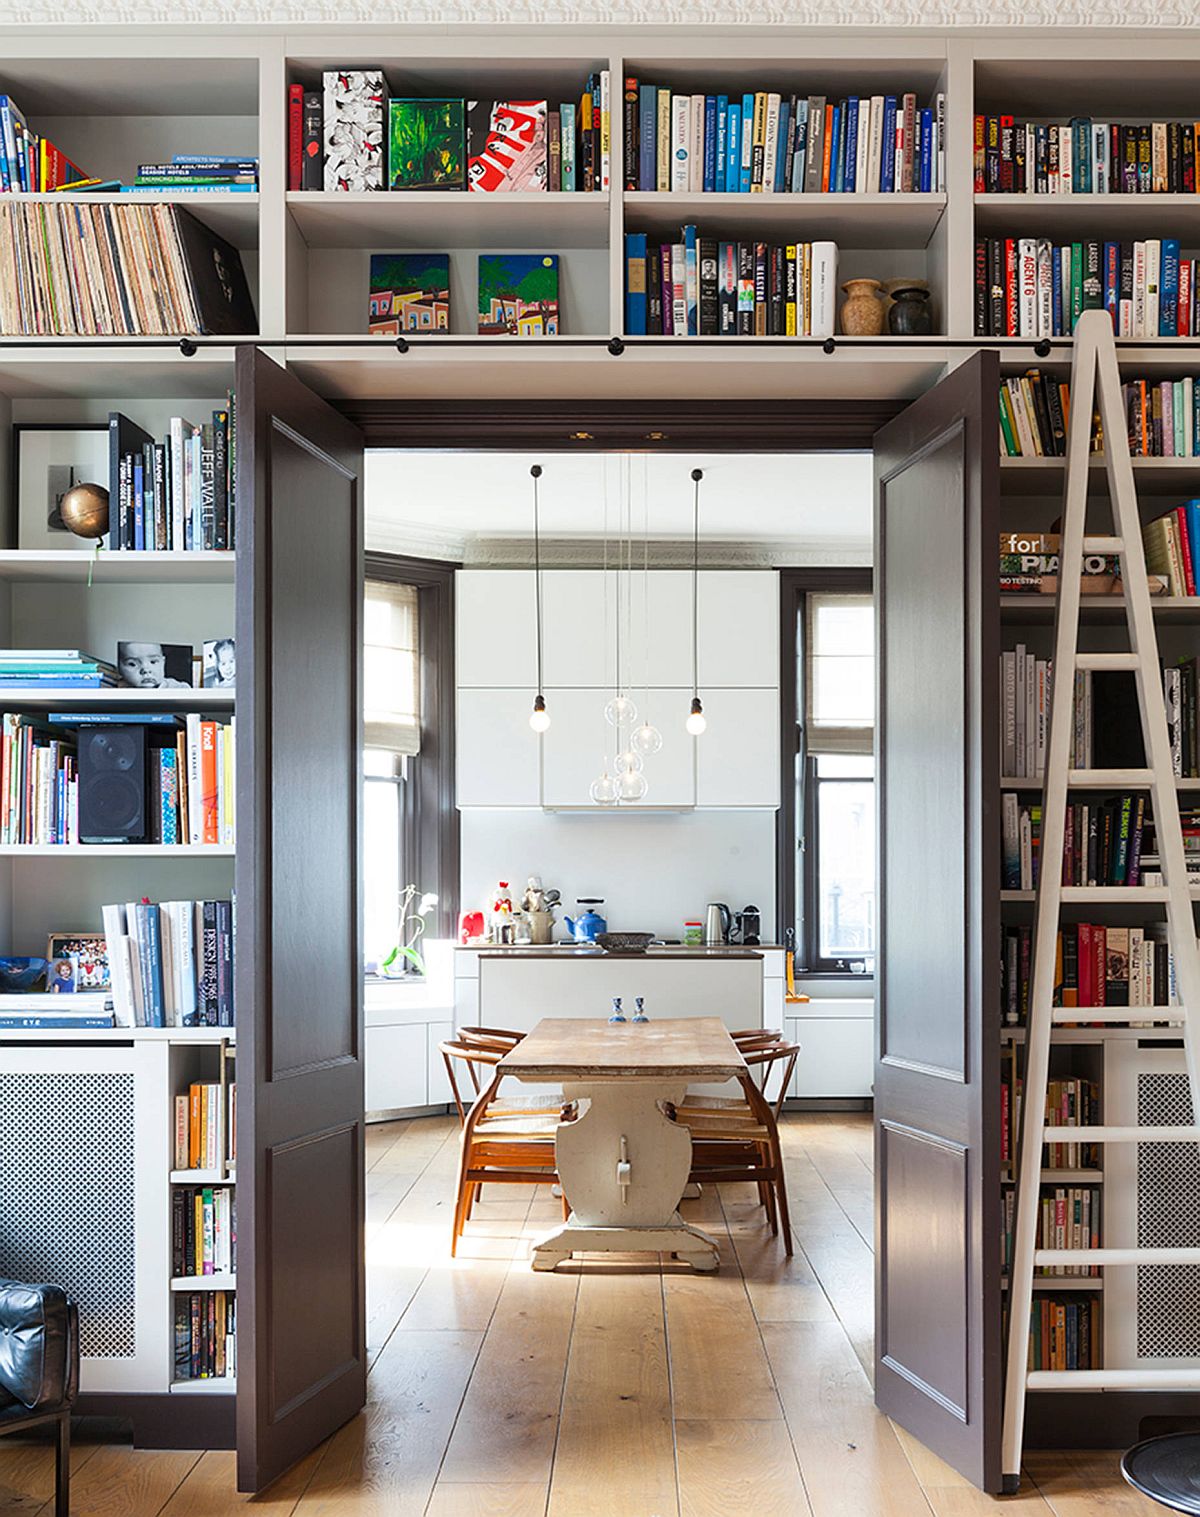 Doorway-with-built-in-shelves-around-it-delineates-the-kitchen-and-the-doorway